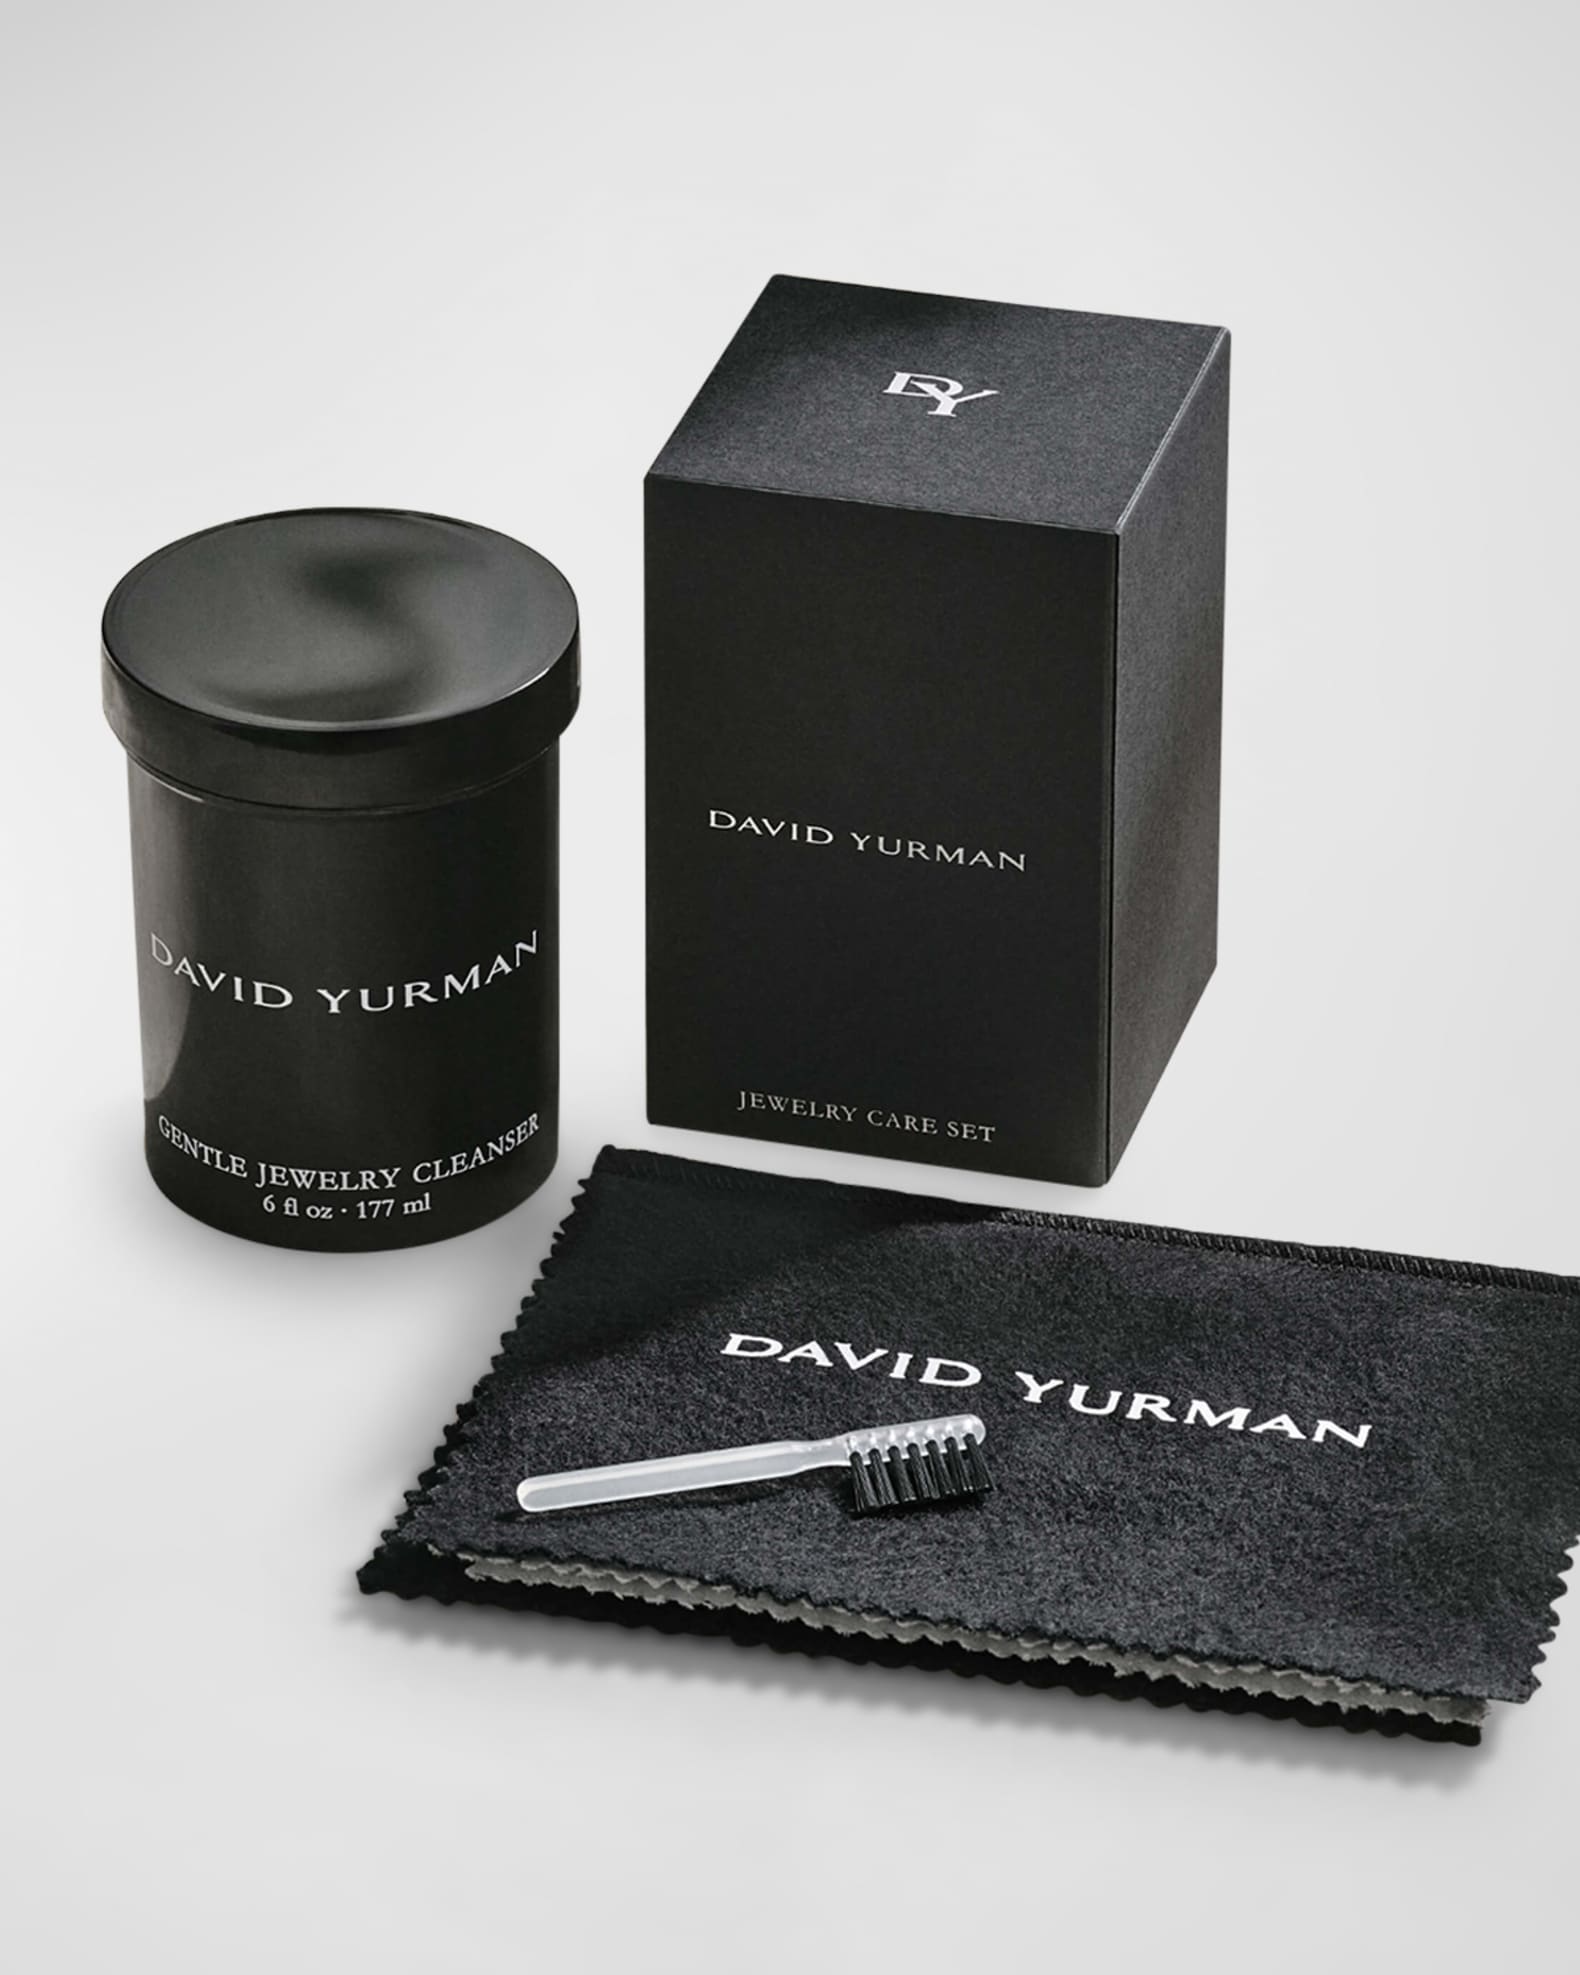 David Yurman David Yurman Cleaning Kit, Yours with any $850 David ...